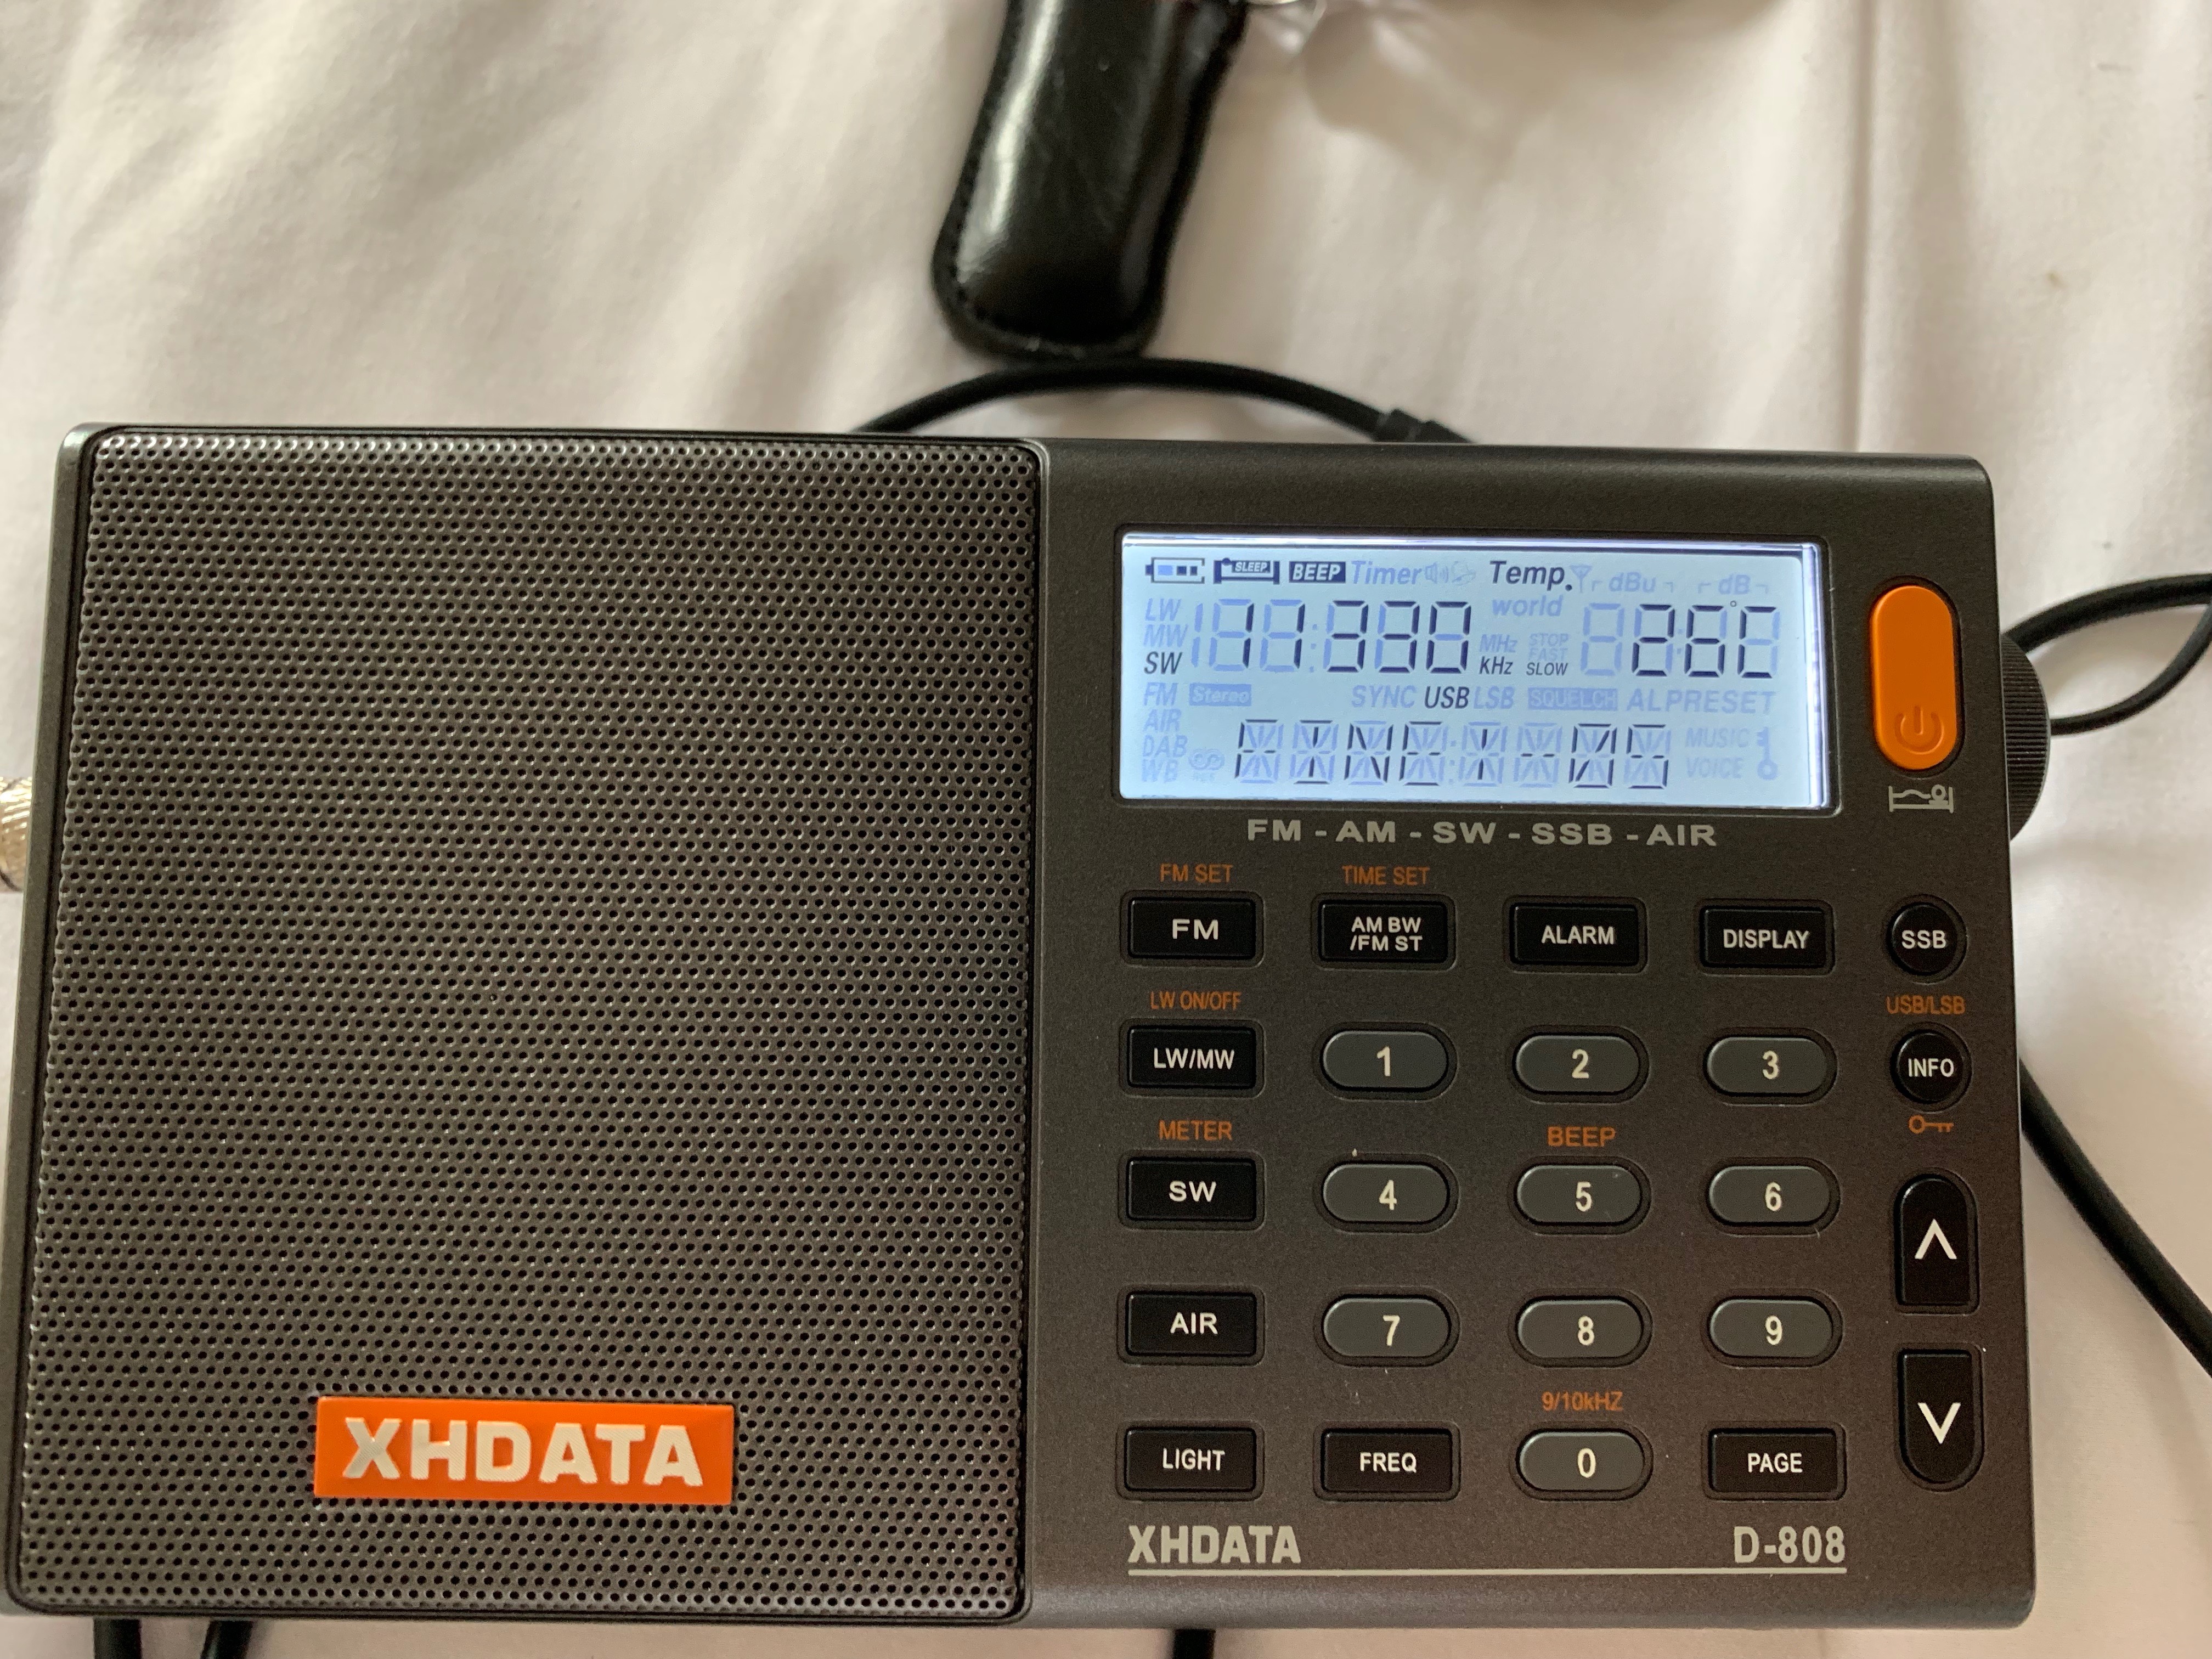 XHDATA AN80 Portable Antenna Two Ways Increase Signal For